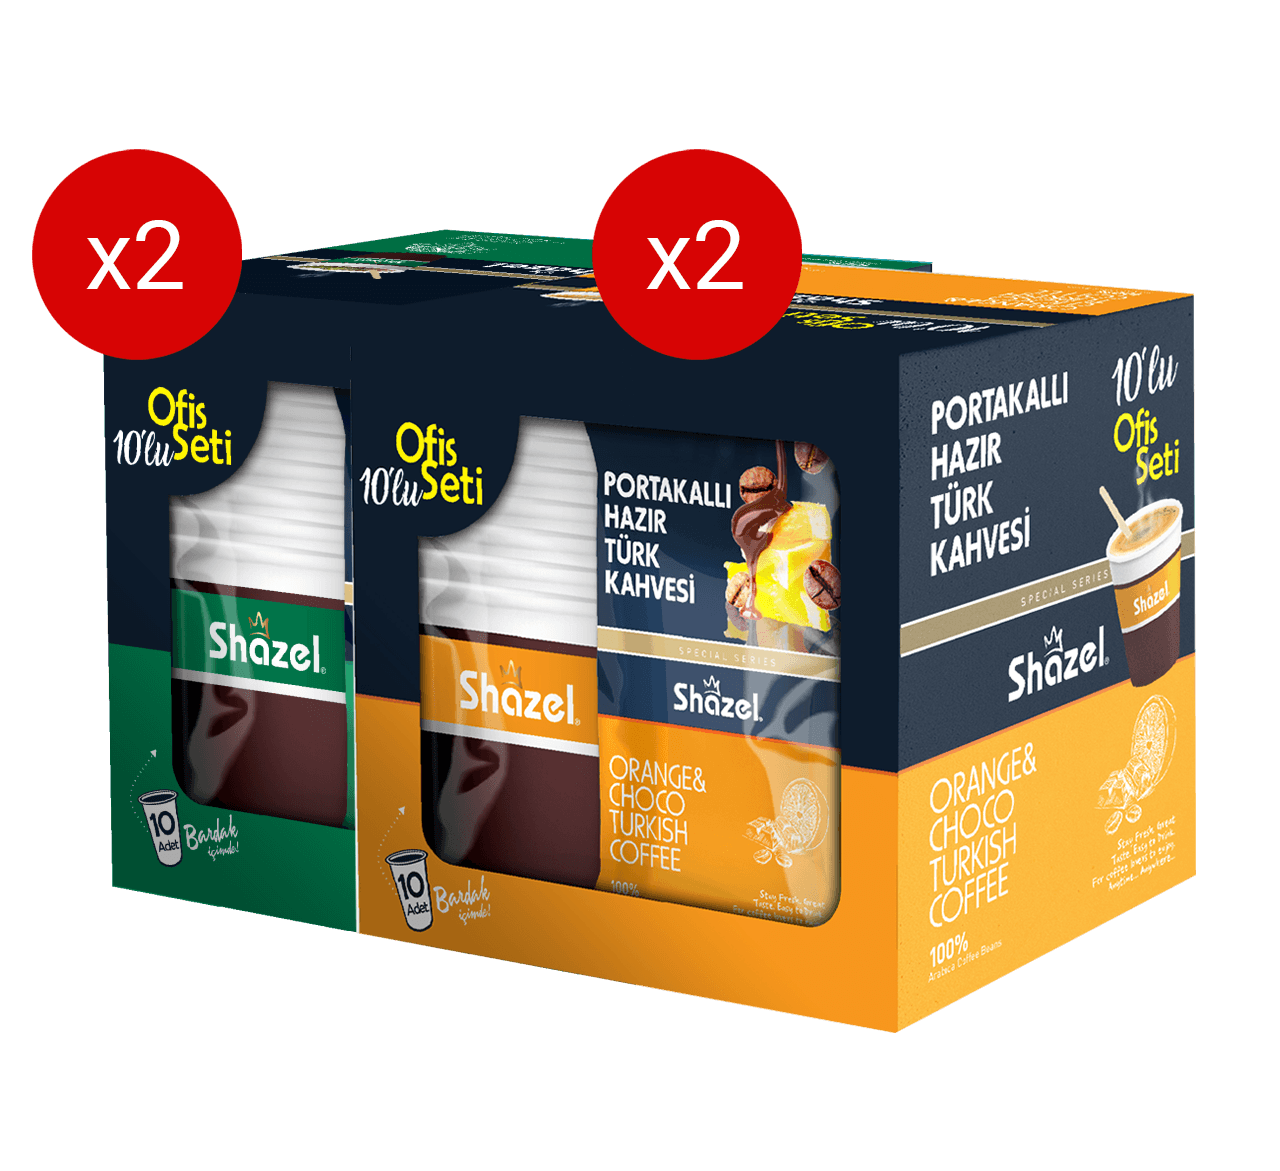 Shazel Mint and Orange Instant Turkish Coffee 4 Boxes 10 Piece